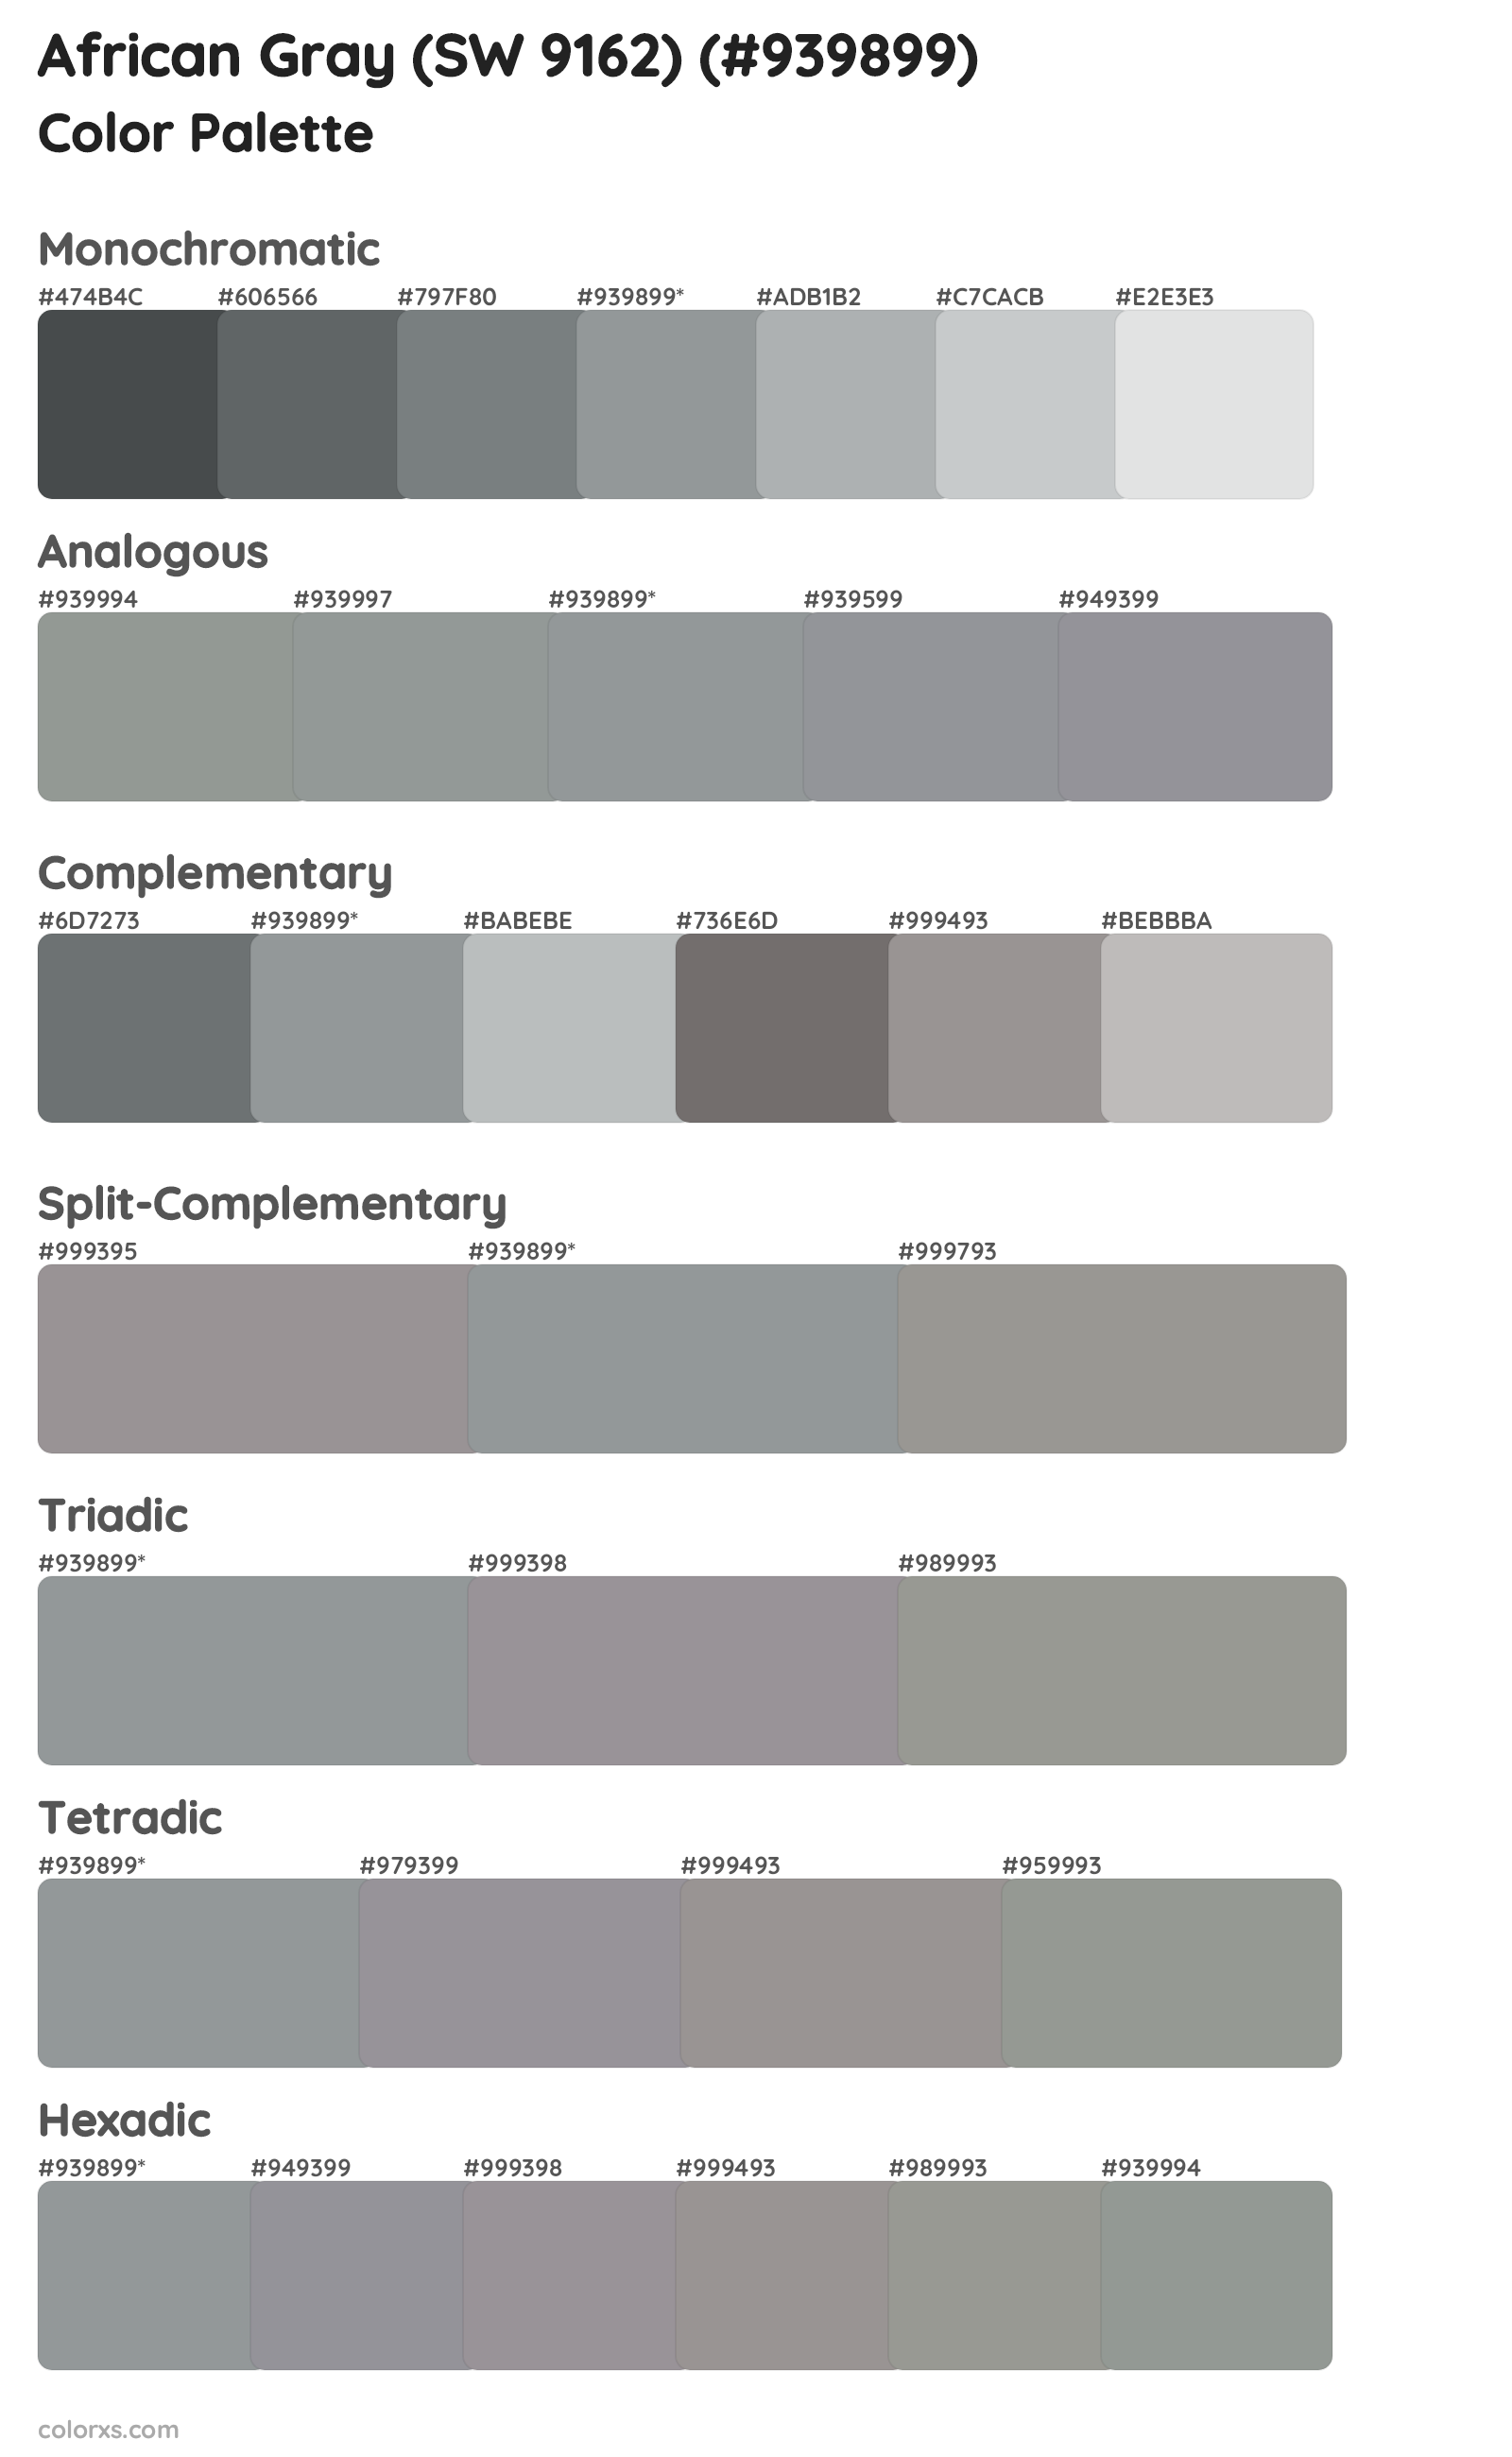 African Gray (SW 9162) Color Scheme Palettes